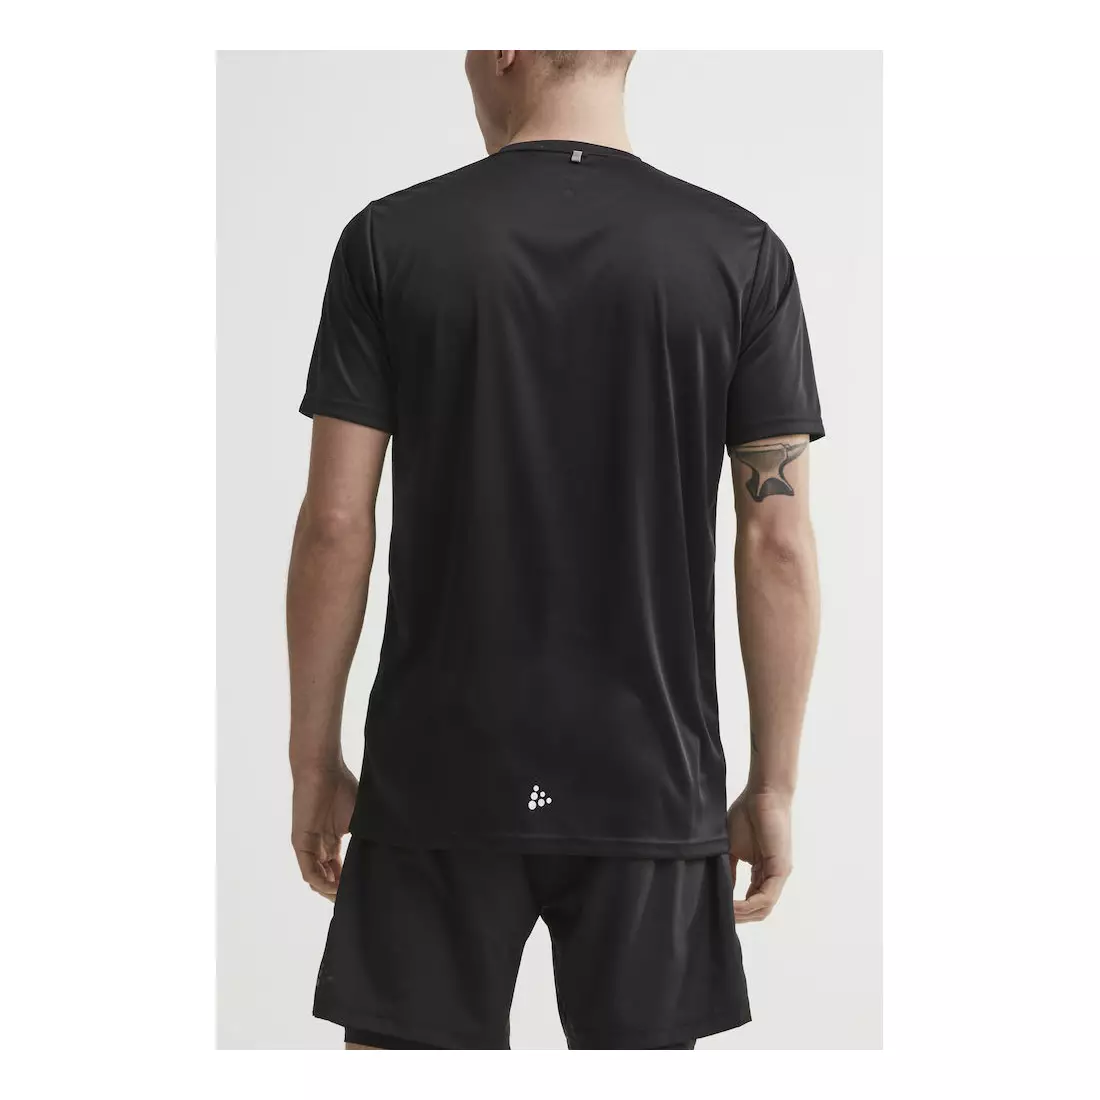 CRAFT EAZE men's sports T-shirt, black, 1906034